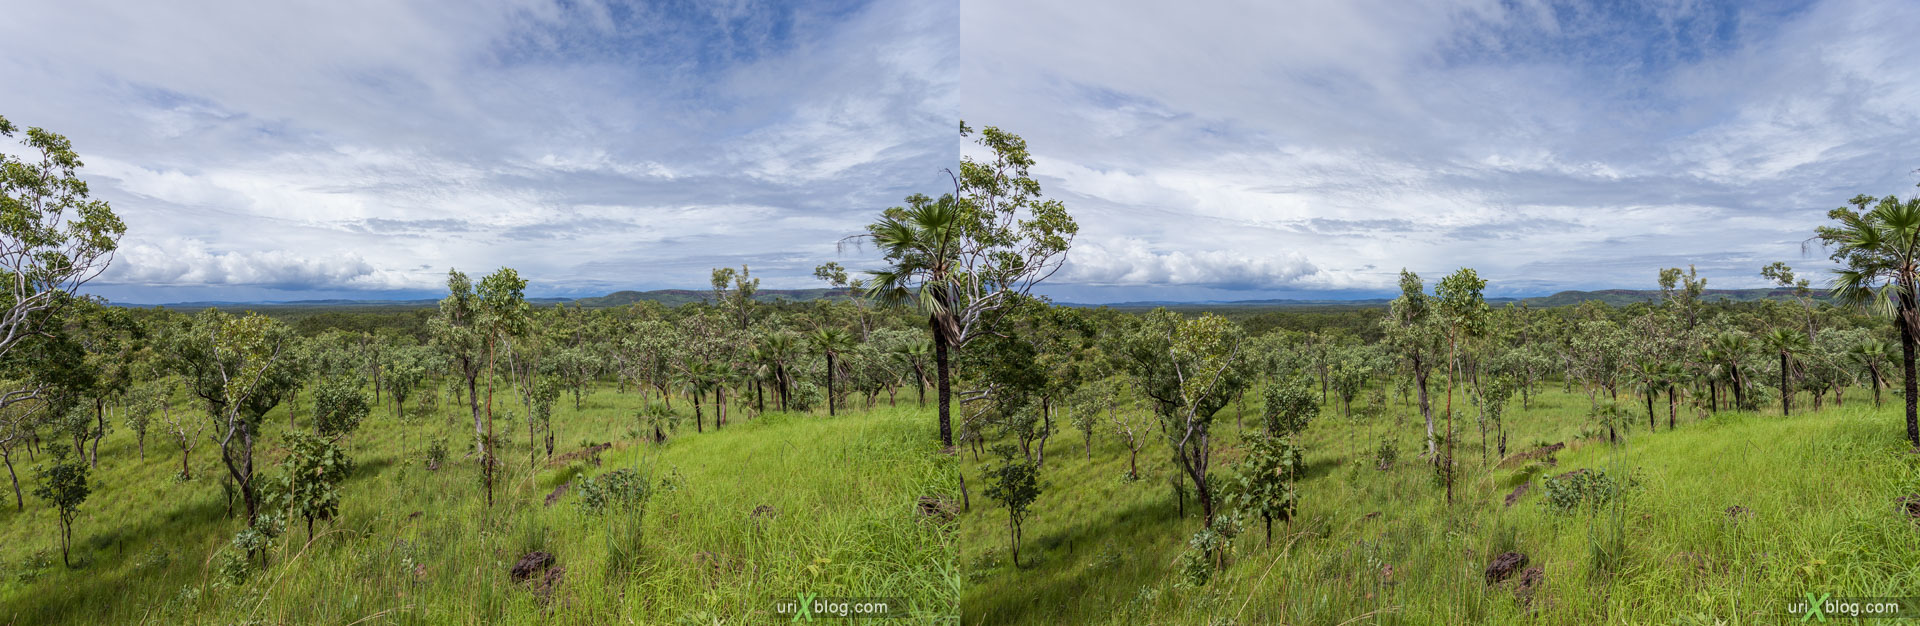 Kakadu National Park, Northern Territory, Australia, 3D, stereo pair, cross-eyed, crossview, cross view stereo pair, stereoscopic, 2011